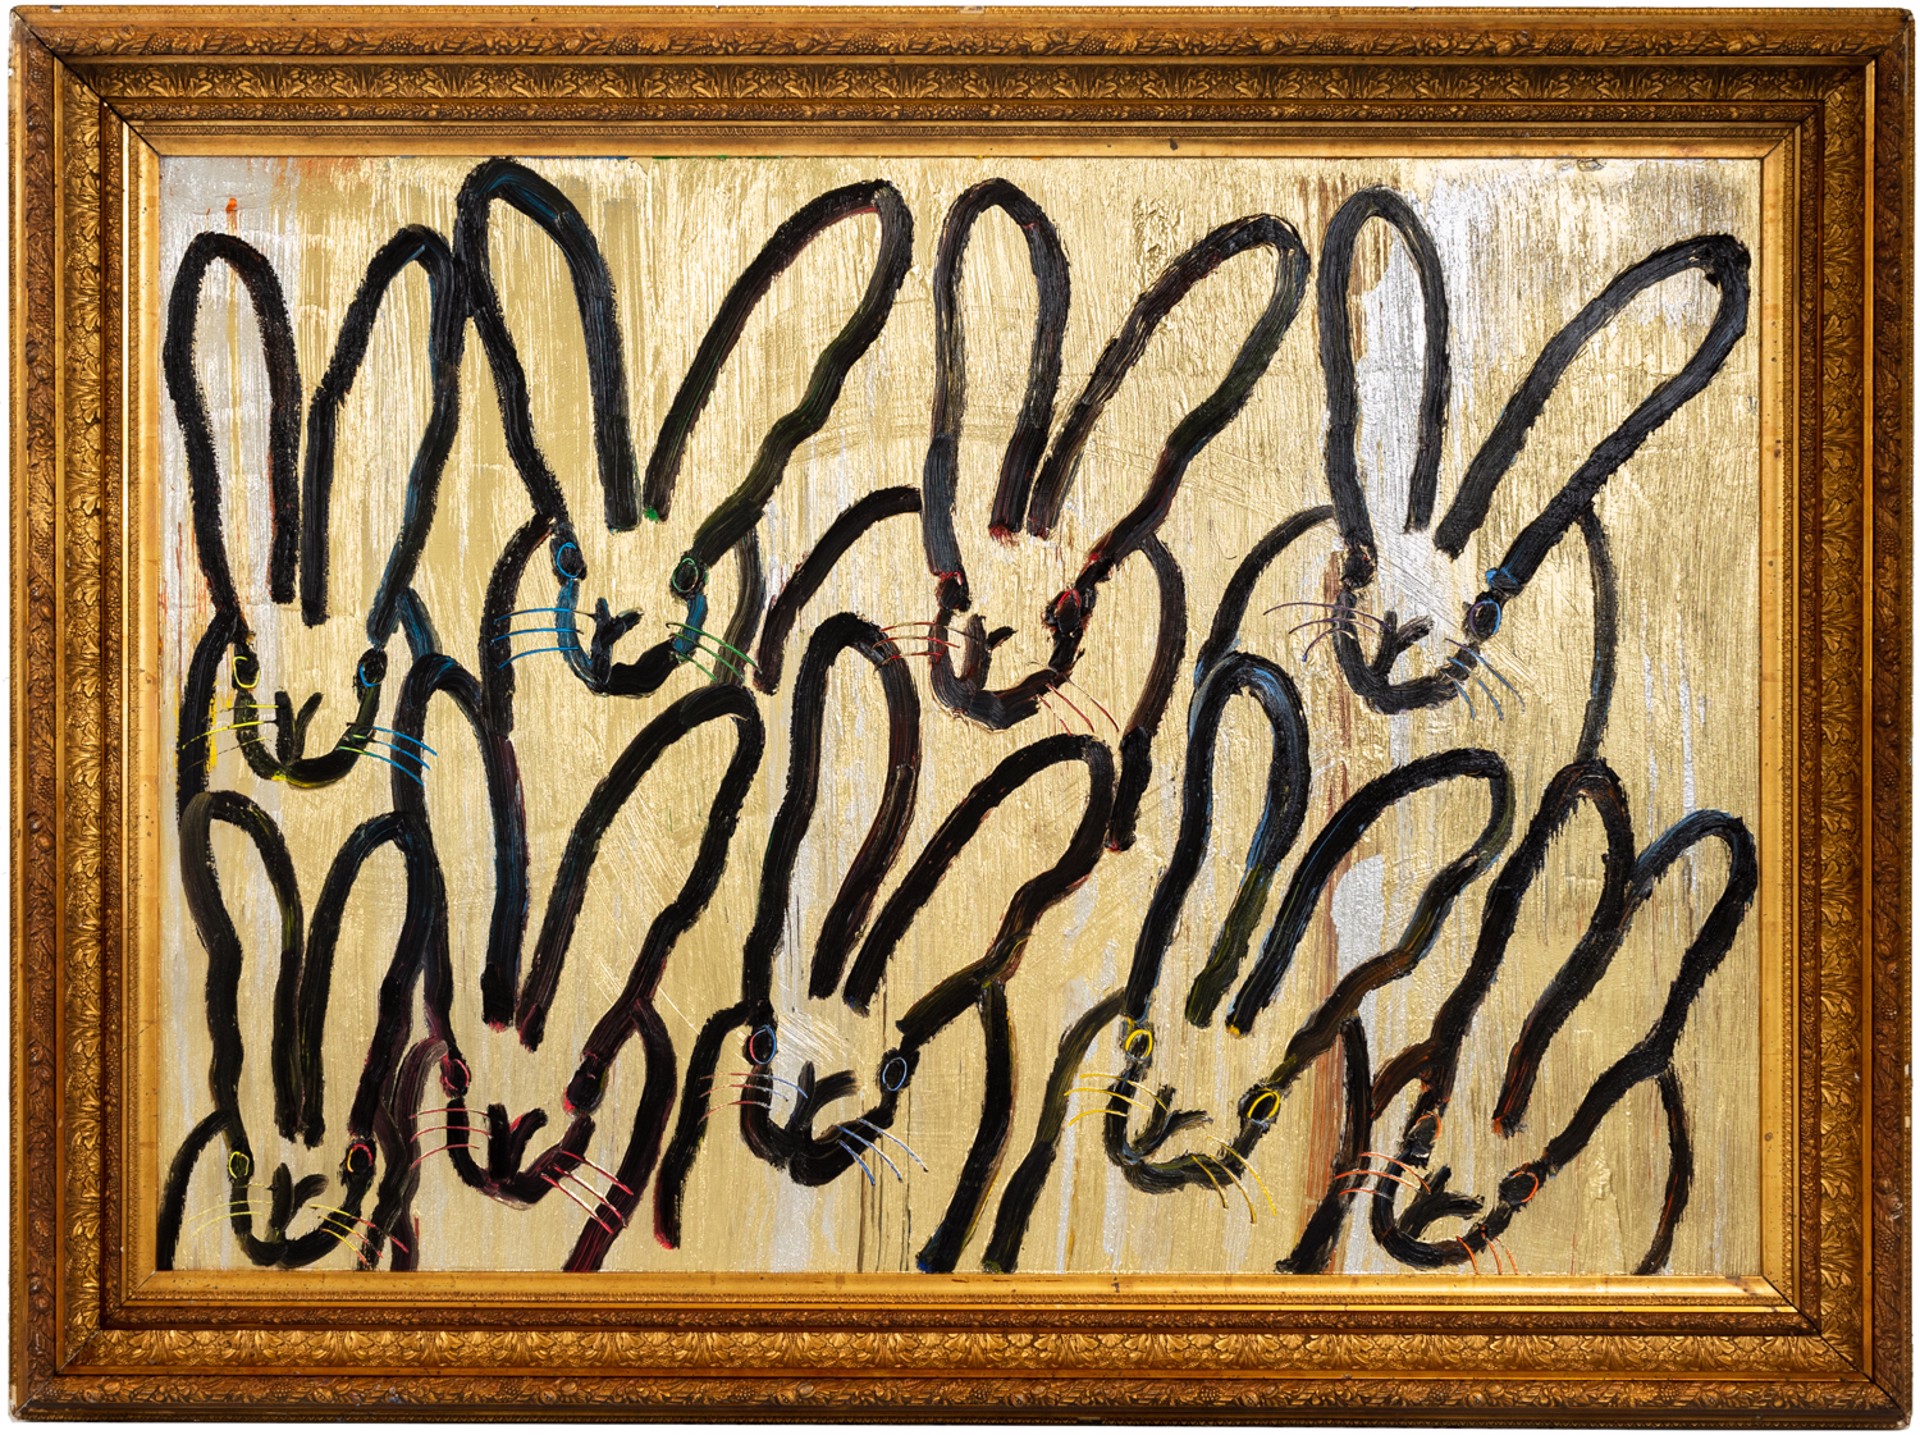 9 Hare by Hunt Slonem